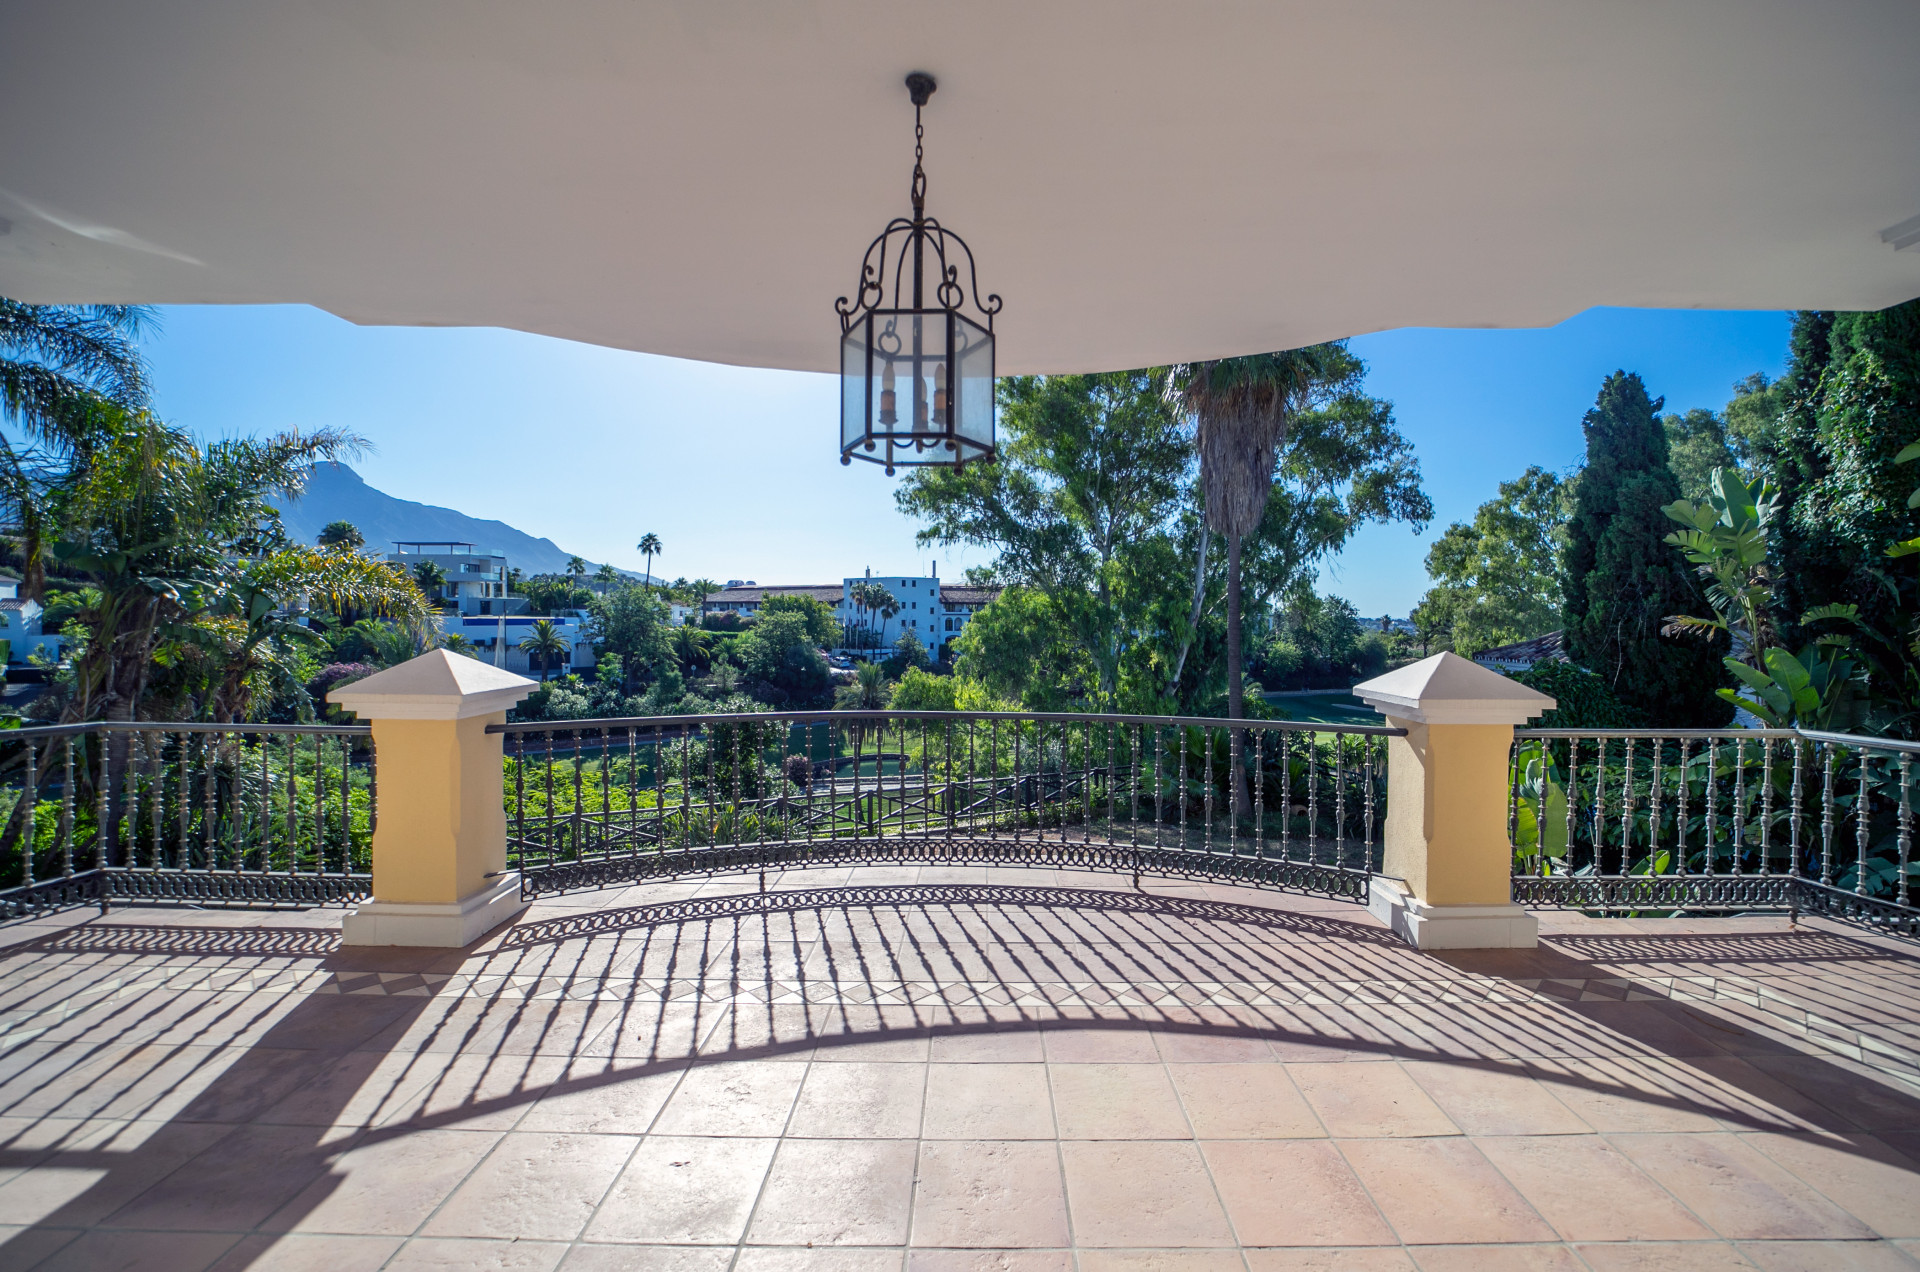 Mansion style villa located in the gated urbanisation of El Herrojo Alto.